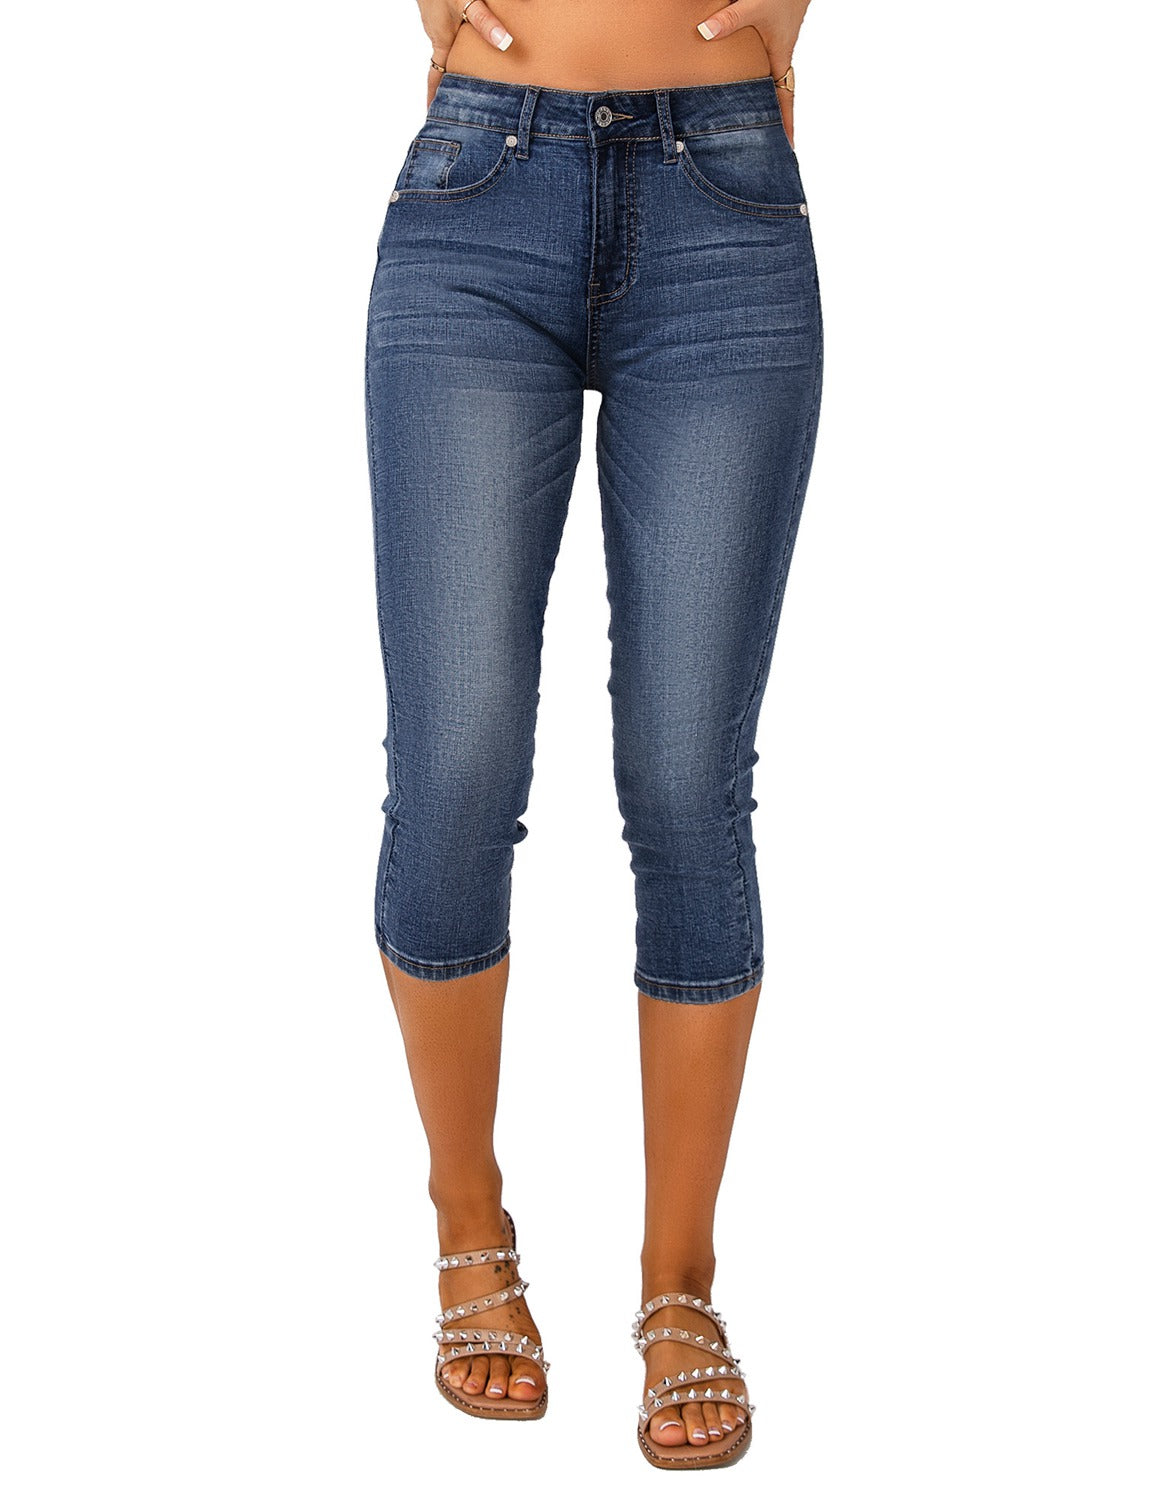 Vetinee Women's Sumer Casual Ripped Skinny Jeans Stretch Denim